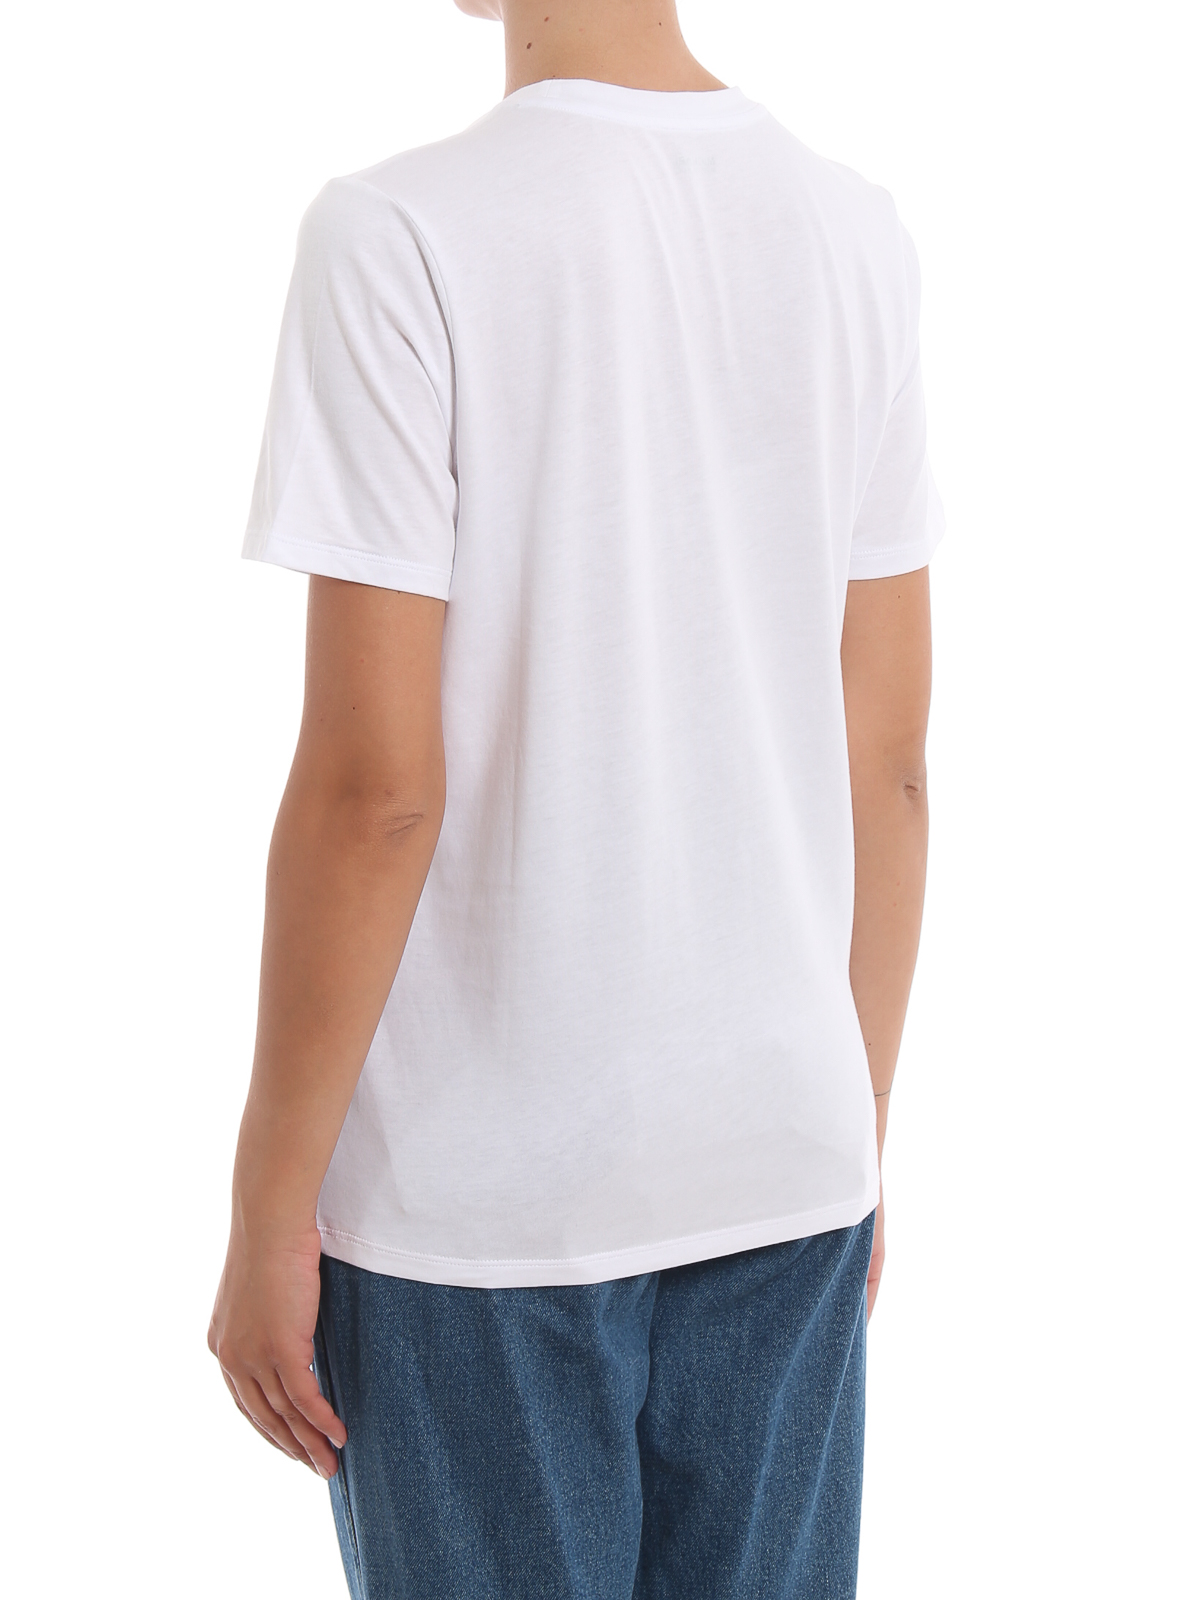 T-shirts Michael Kors - Rainbow logo cotton basic Tee - MU95M7U97J100